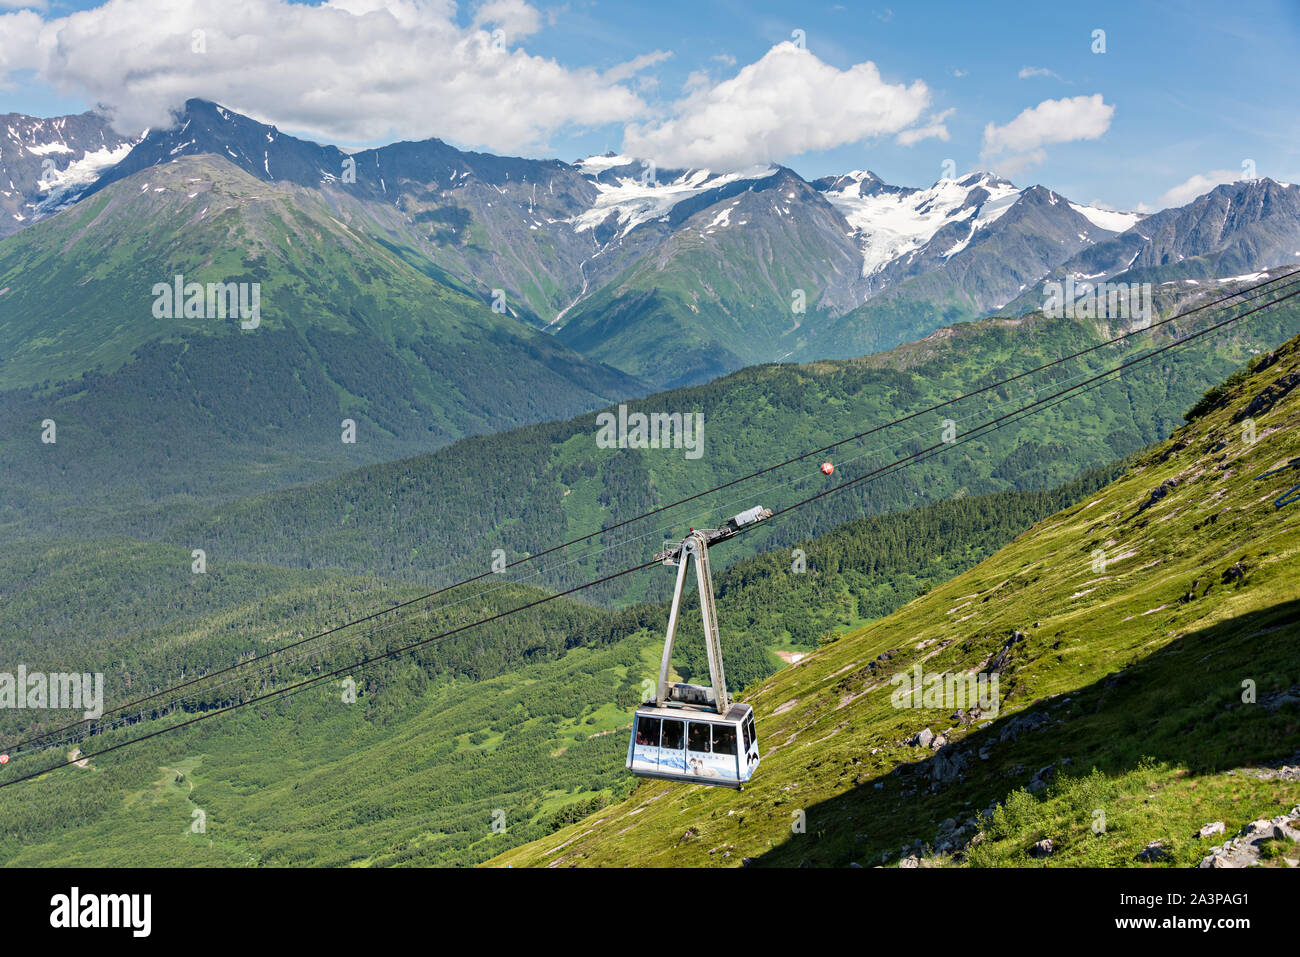 The Alyeska Aerial Tram climbs up the mountains in Girdwood, Alaska. The cable tram climbs 2,300 feet to the top of Mt. Alyeska in the Church Mountains. Stock Photo